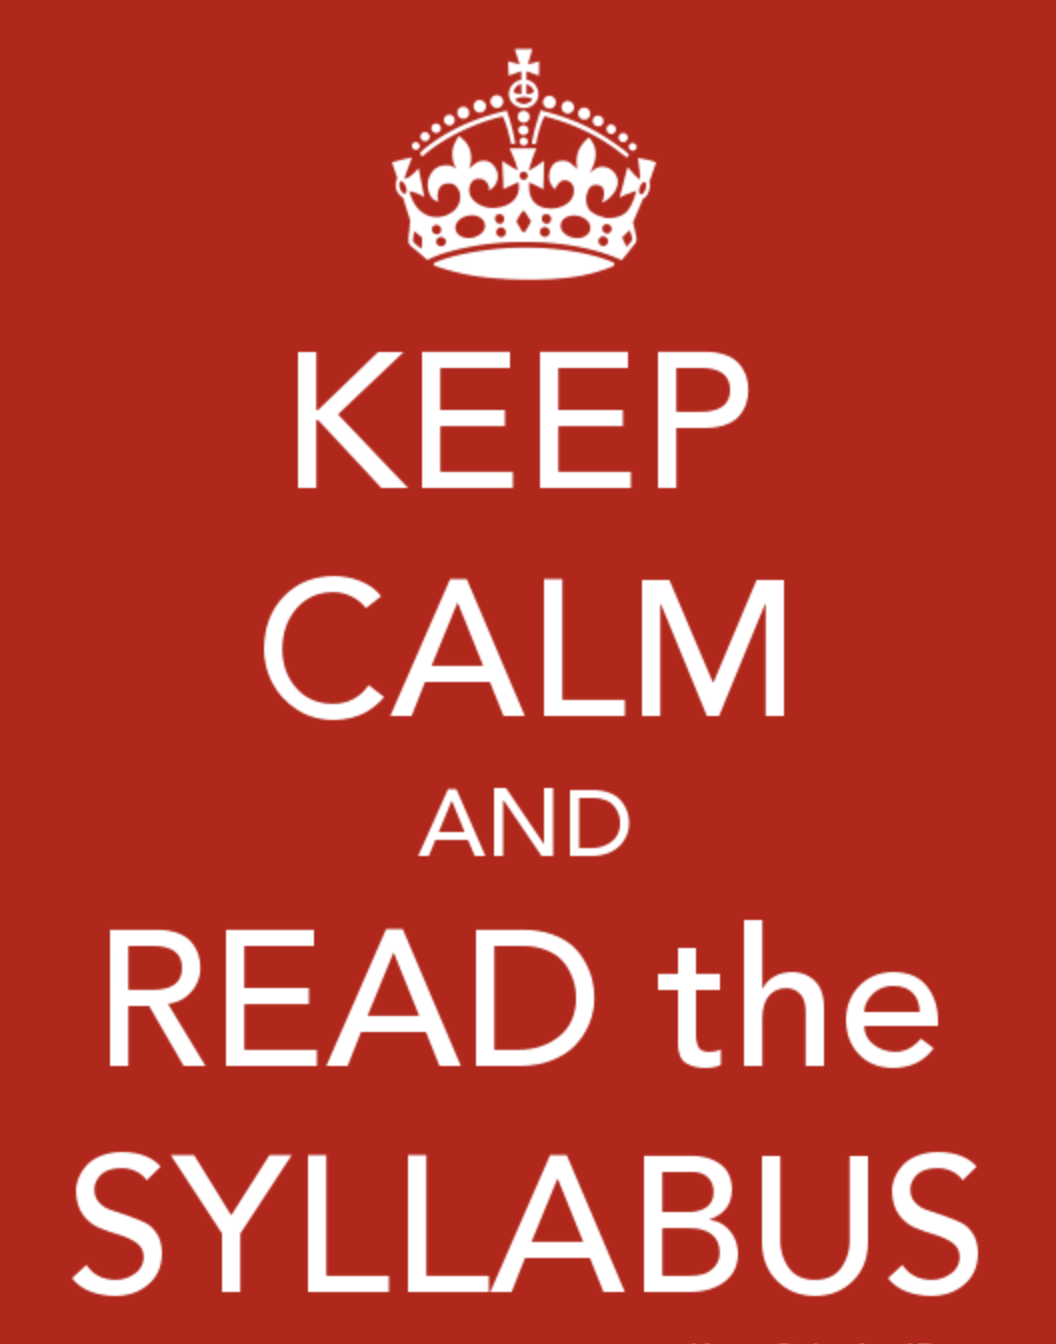 Read the syllabus